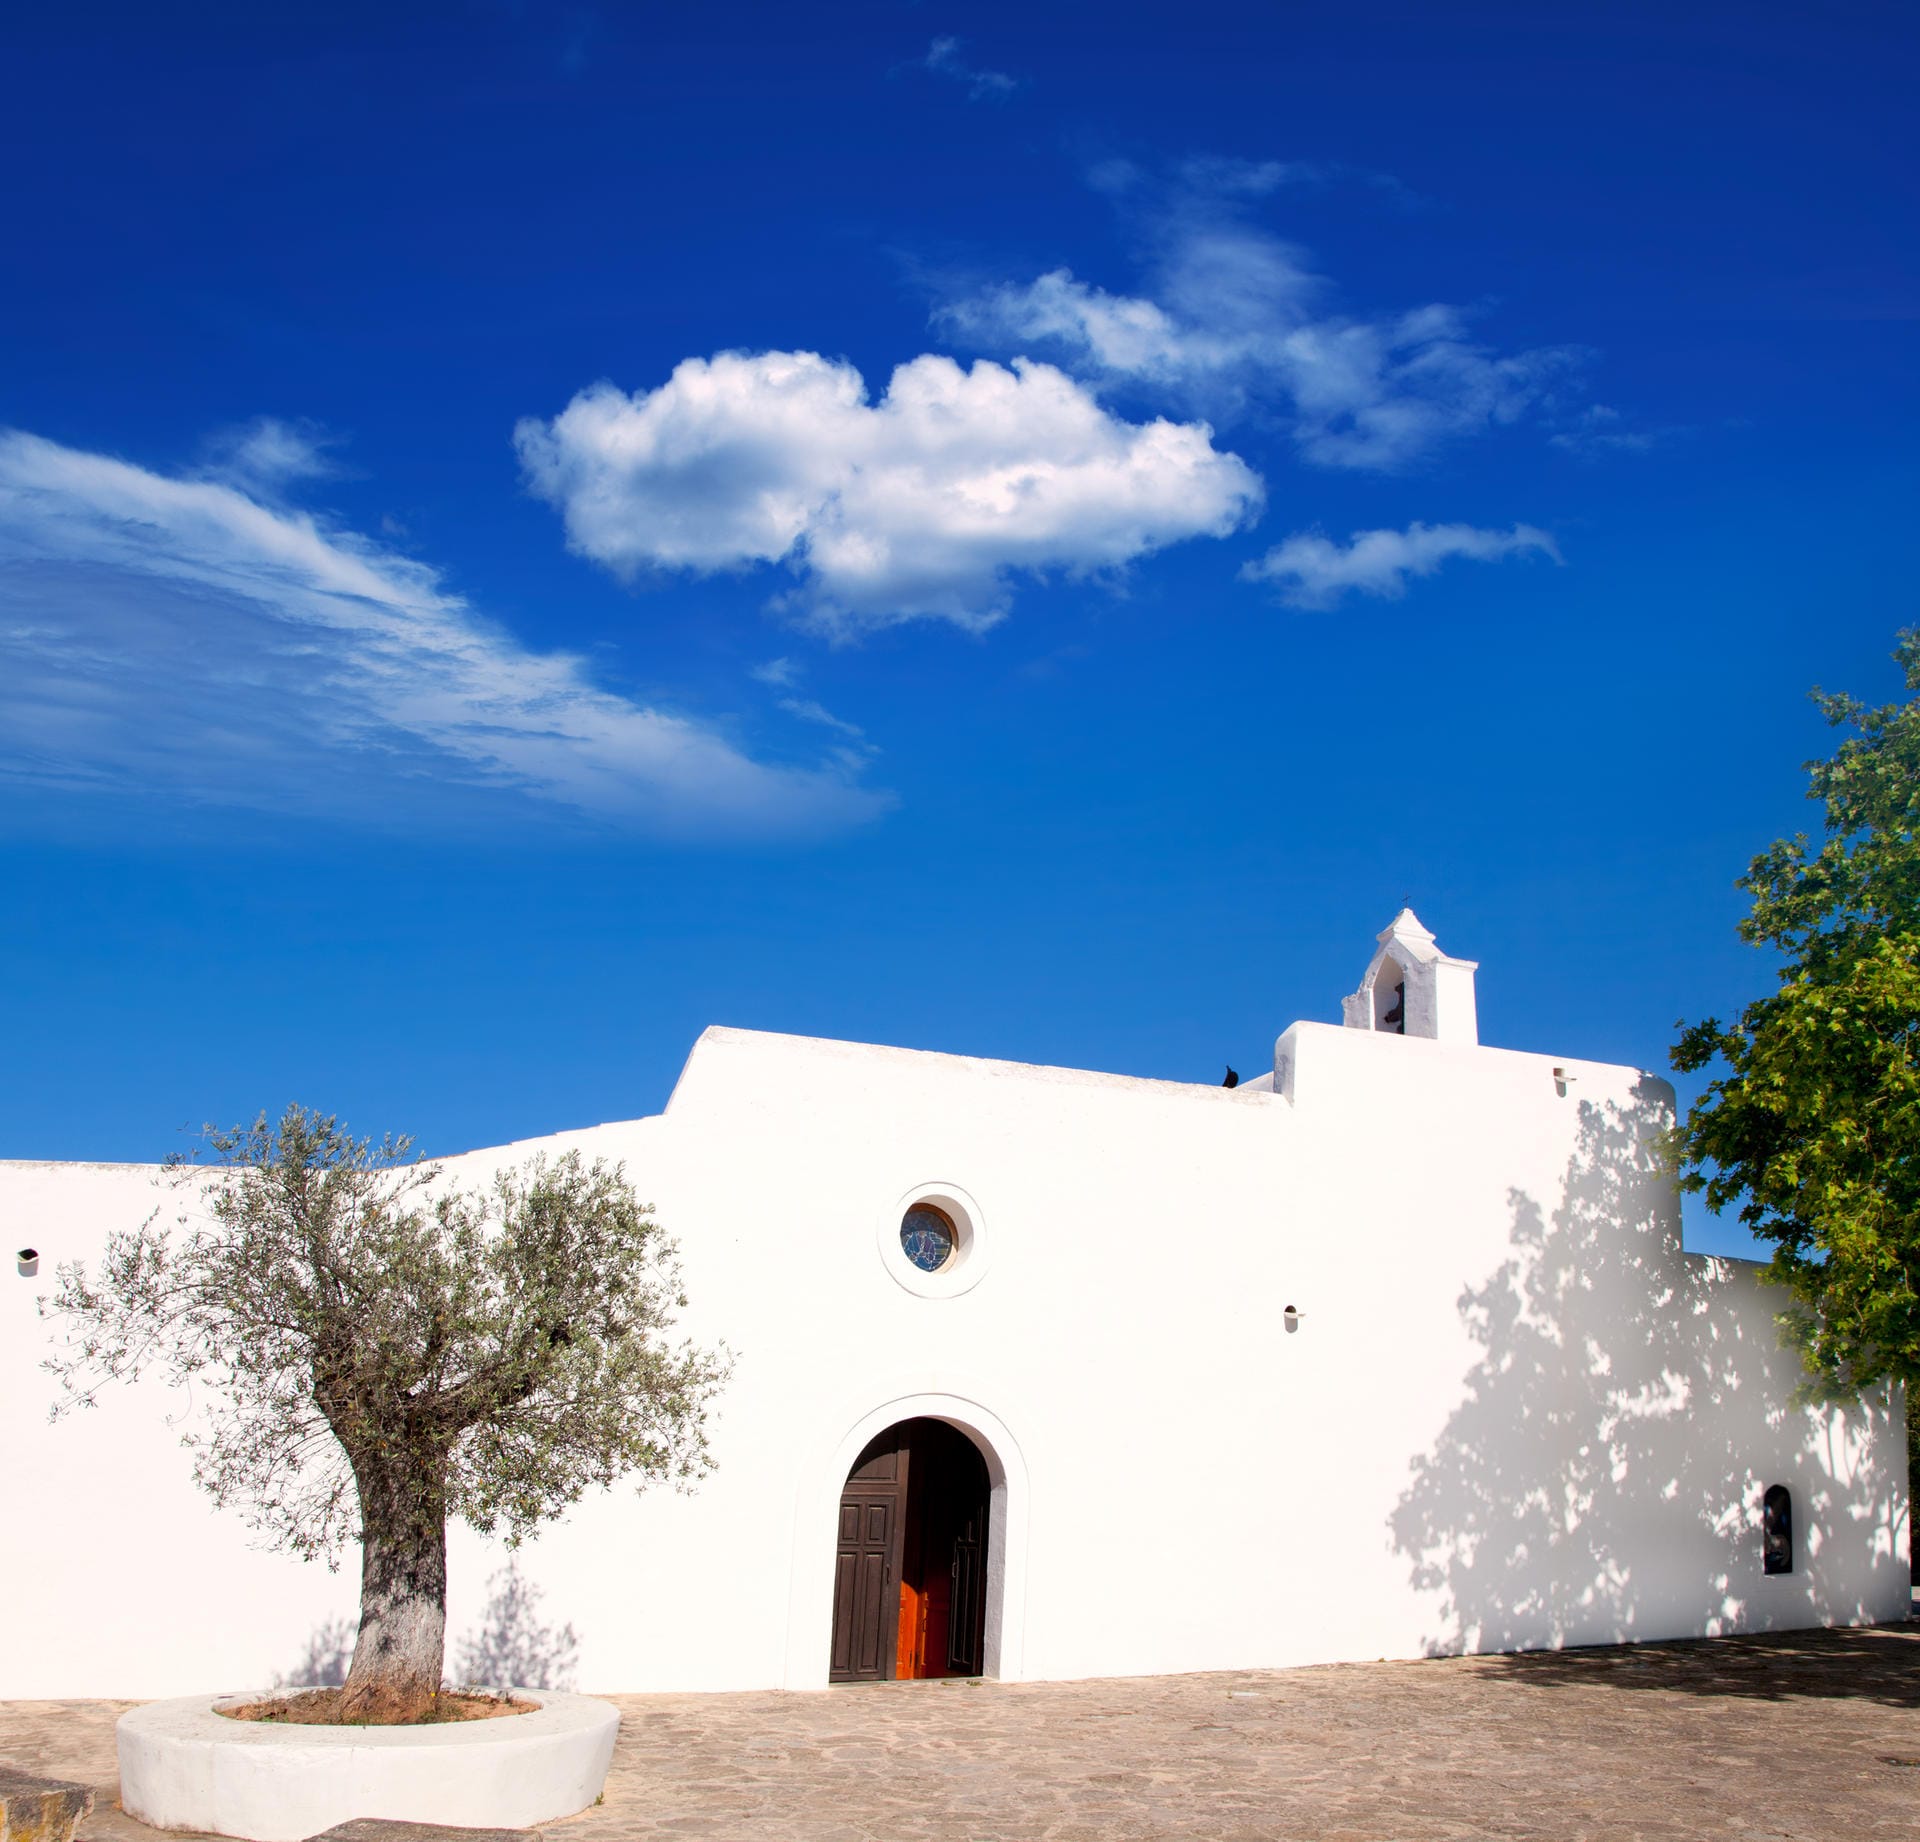 Das ist die Kirche Santa Agnes (de Corona Ines) auf Ibiza.